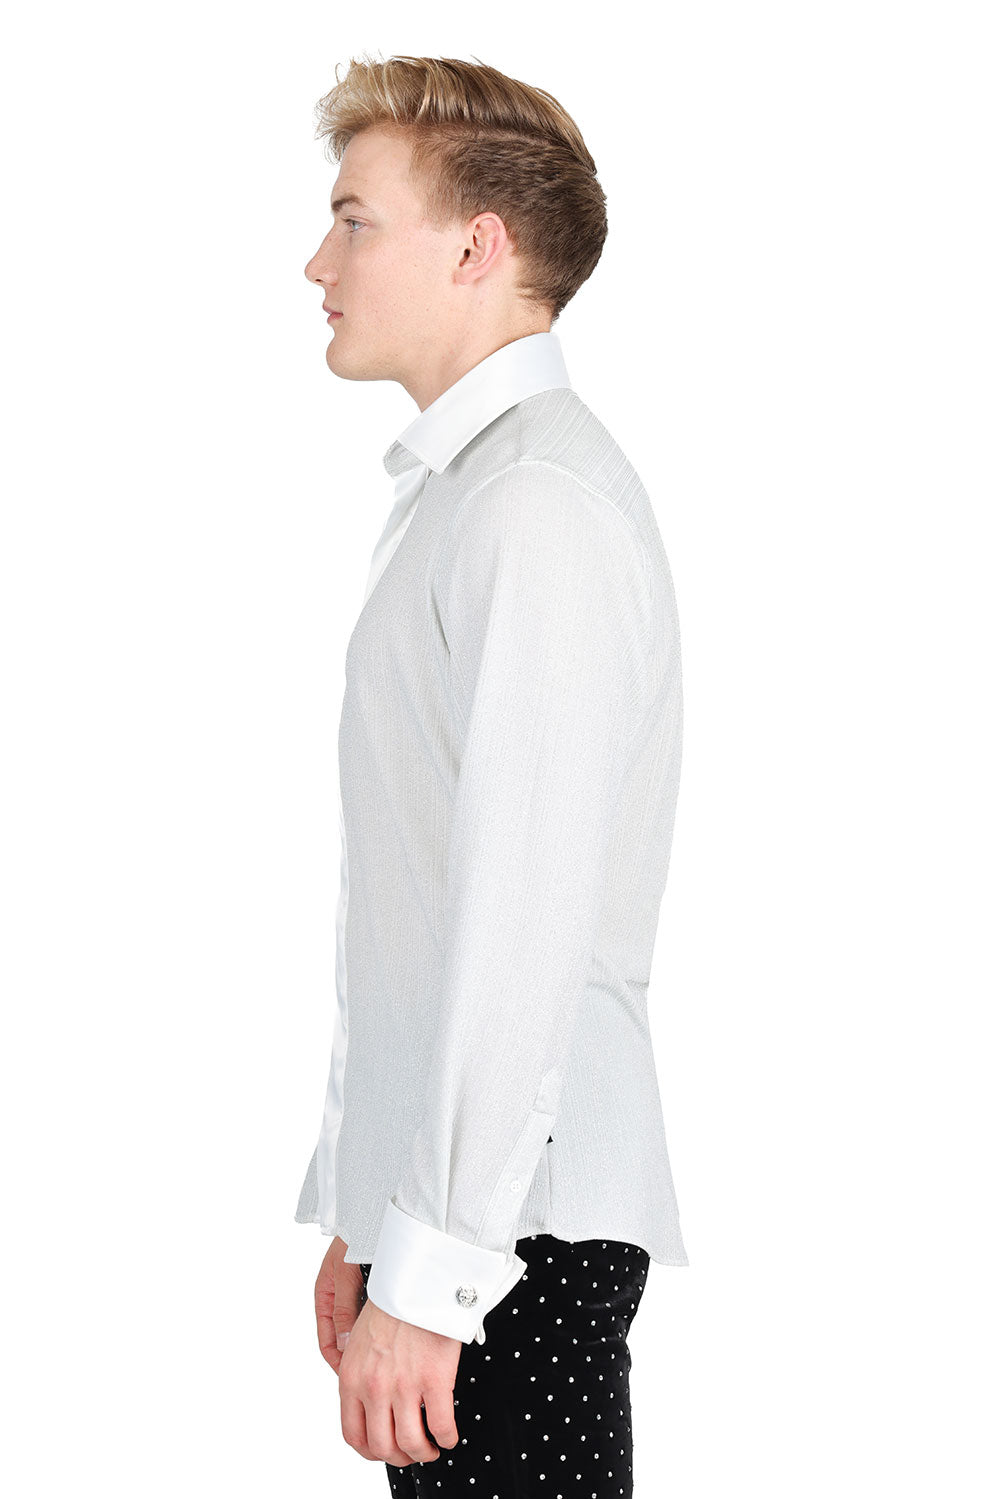 Barabas Men's French Cuff Long Sleeve Button Down Shirt 2FCS10002 White 